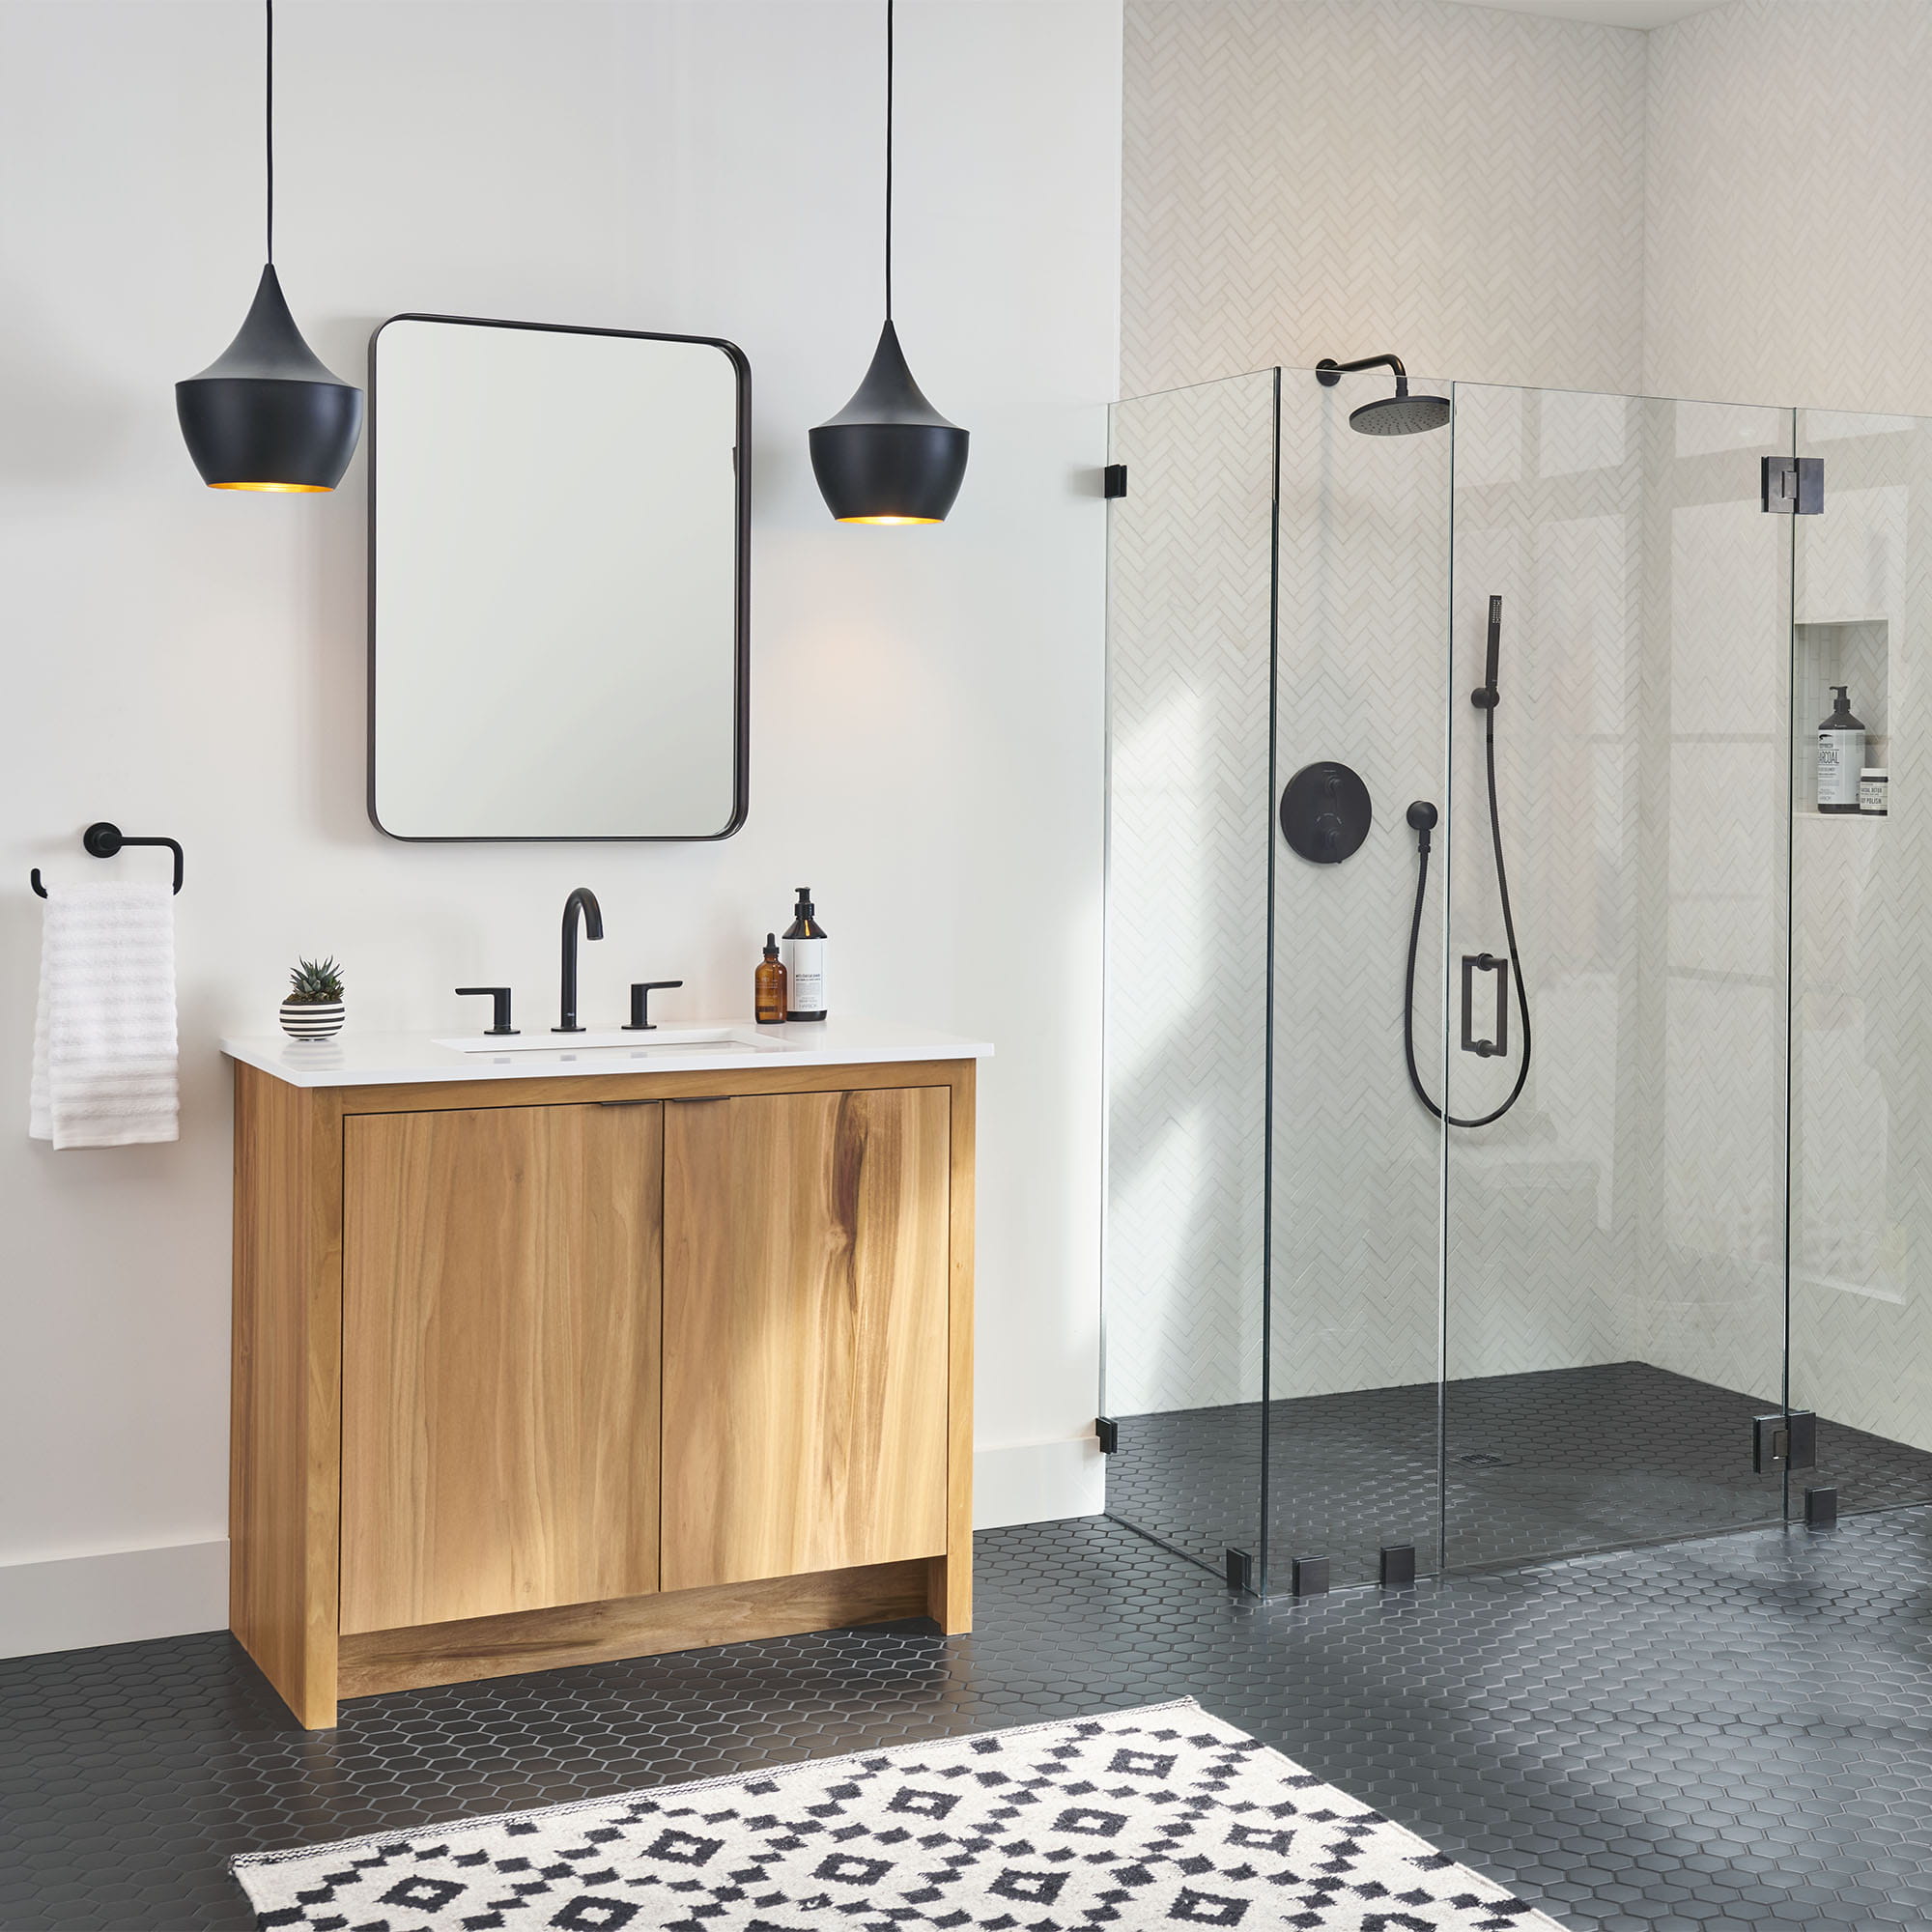 Studio S 8 Inch Widespread 2 Handle Bathroom Faucet 12 gpm 45 L min With Lever Handles MATTE BLACK